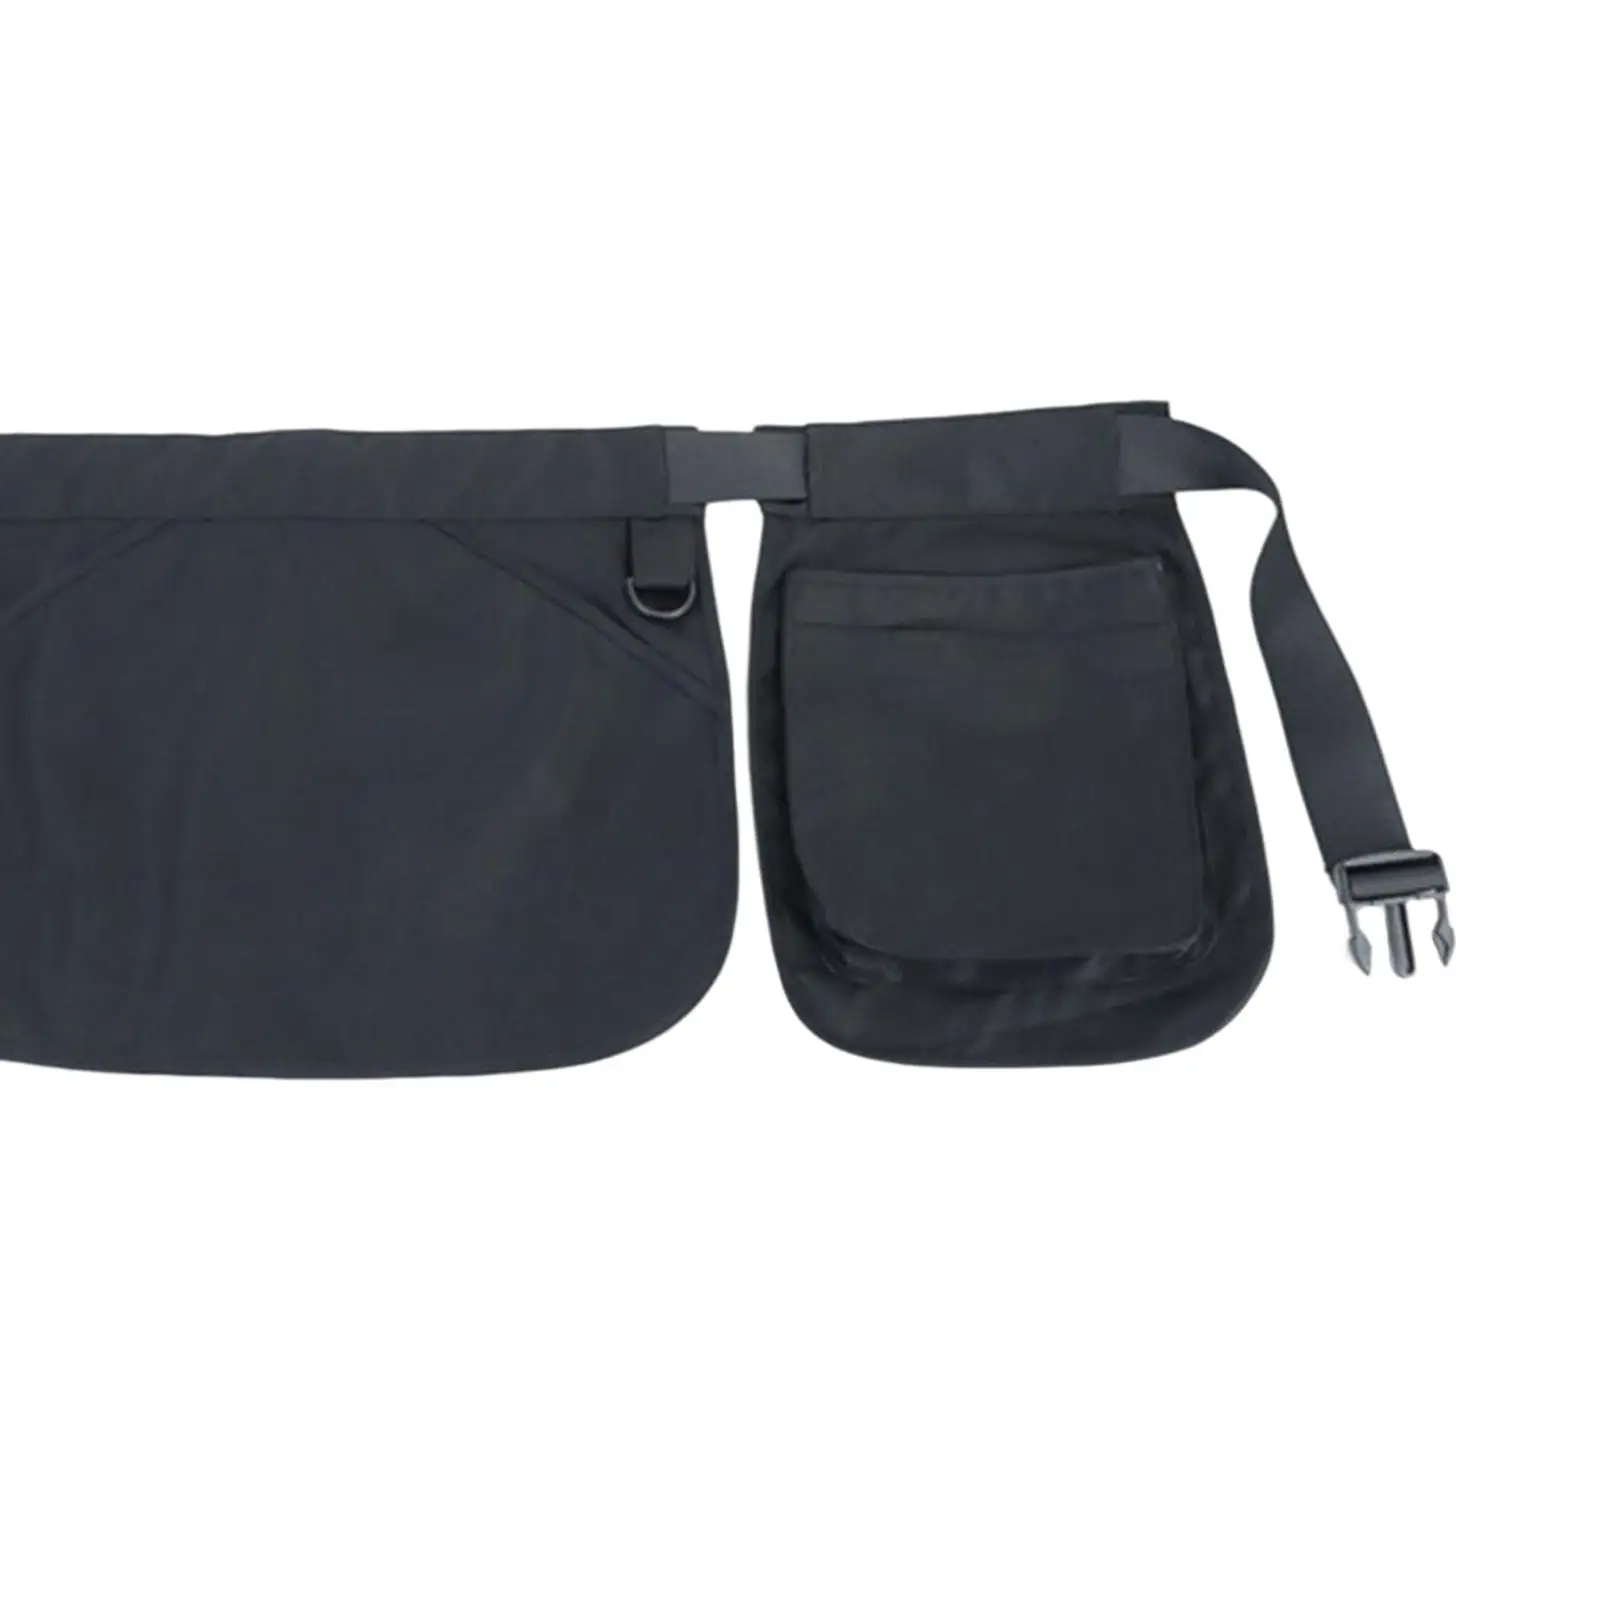 Fashion Belt Bag Adjustable Large Capacity for Travel Fishing Camping